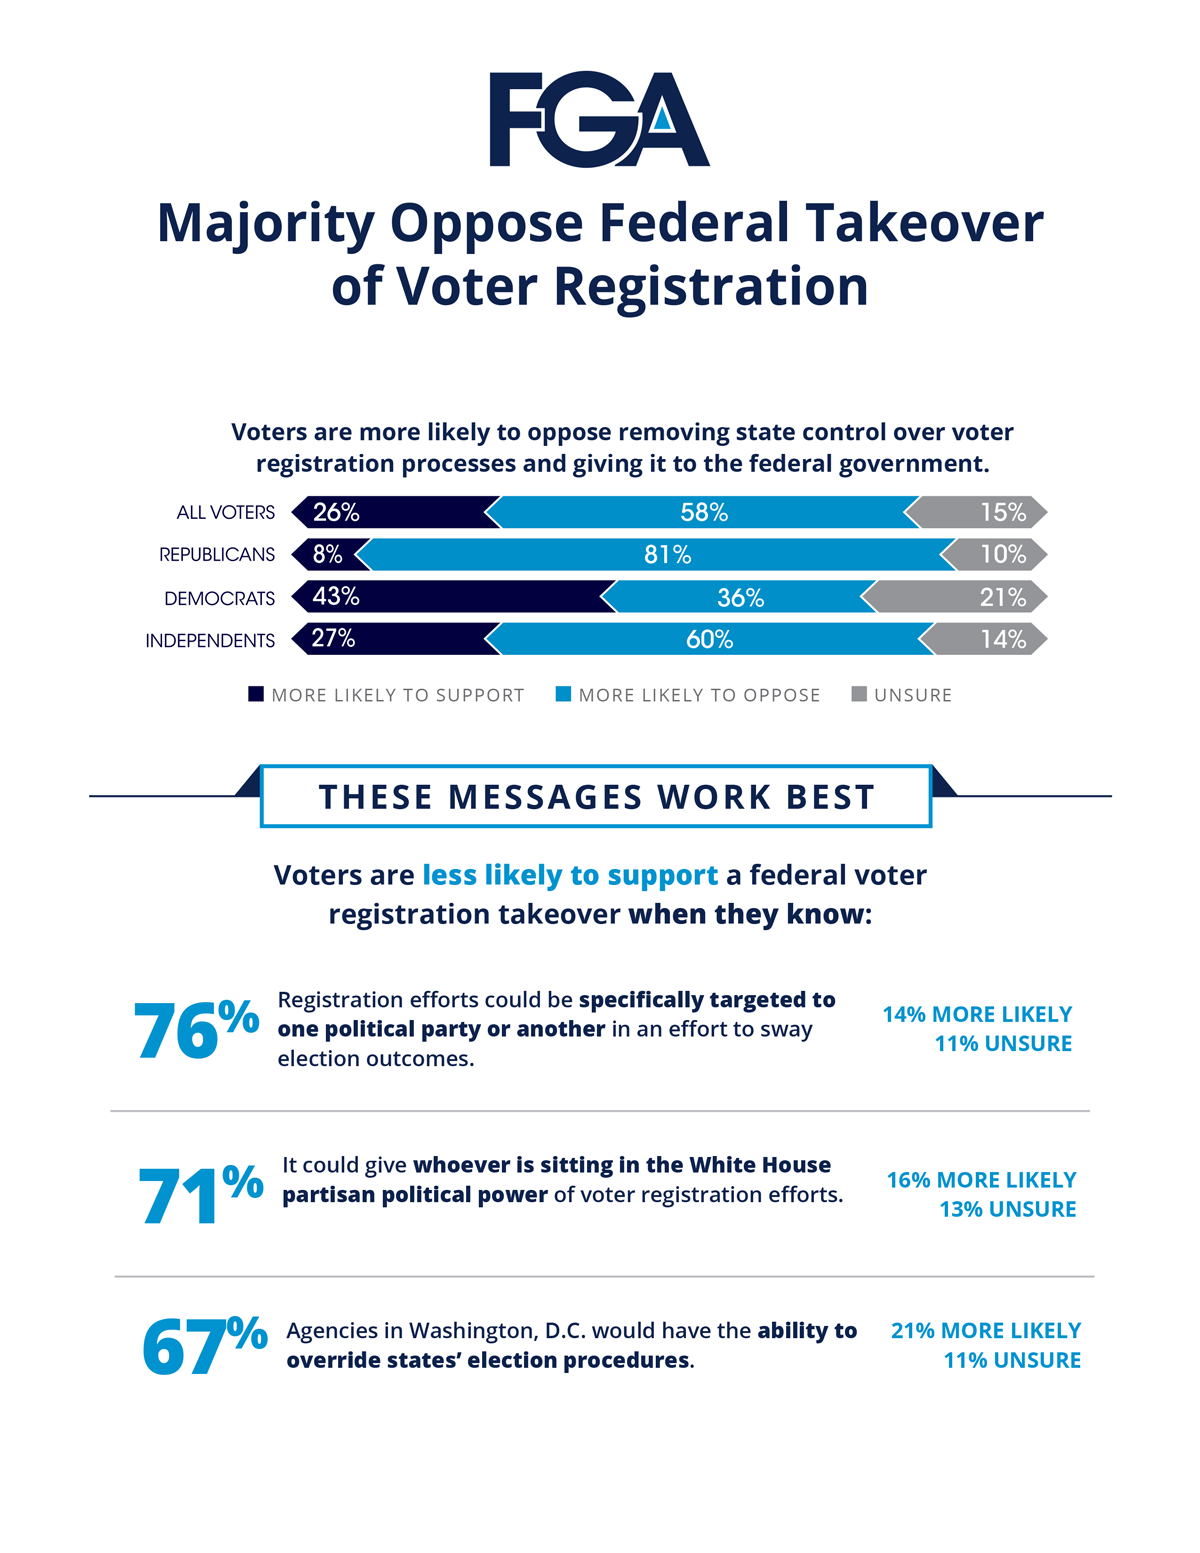 Majority Oppose Federal Takeover of Voter Registration